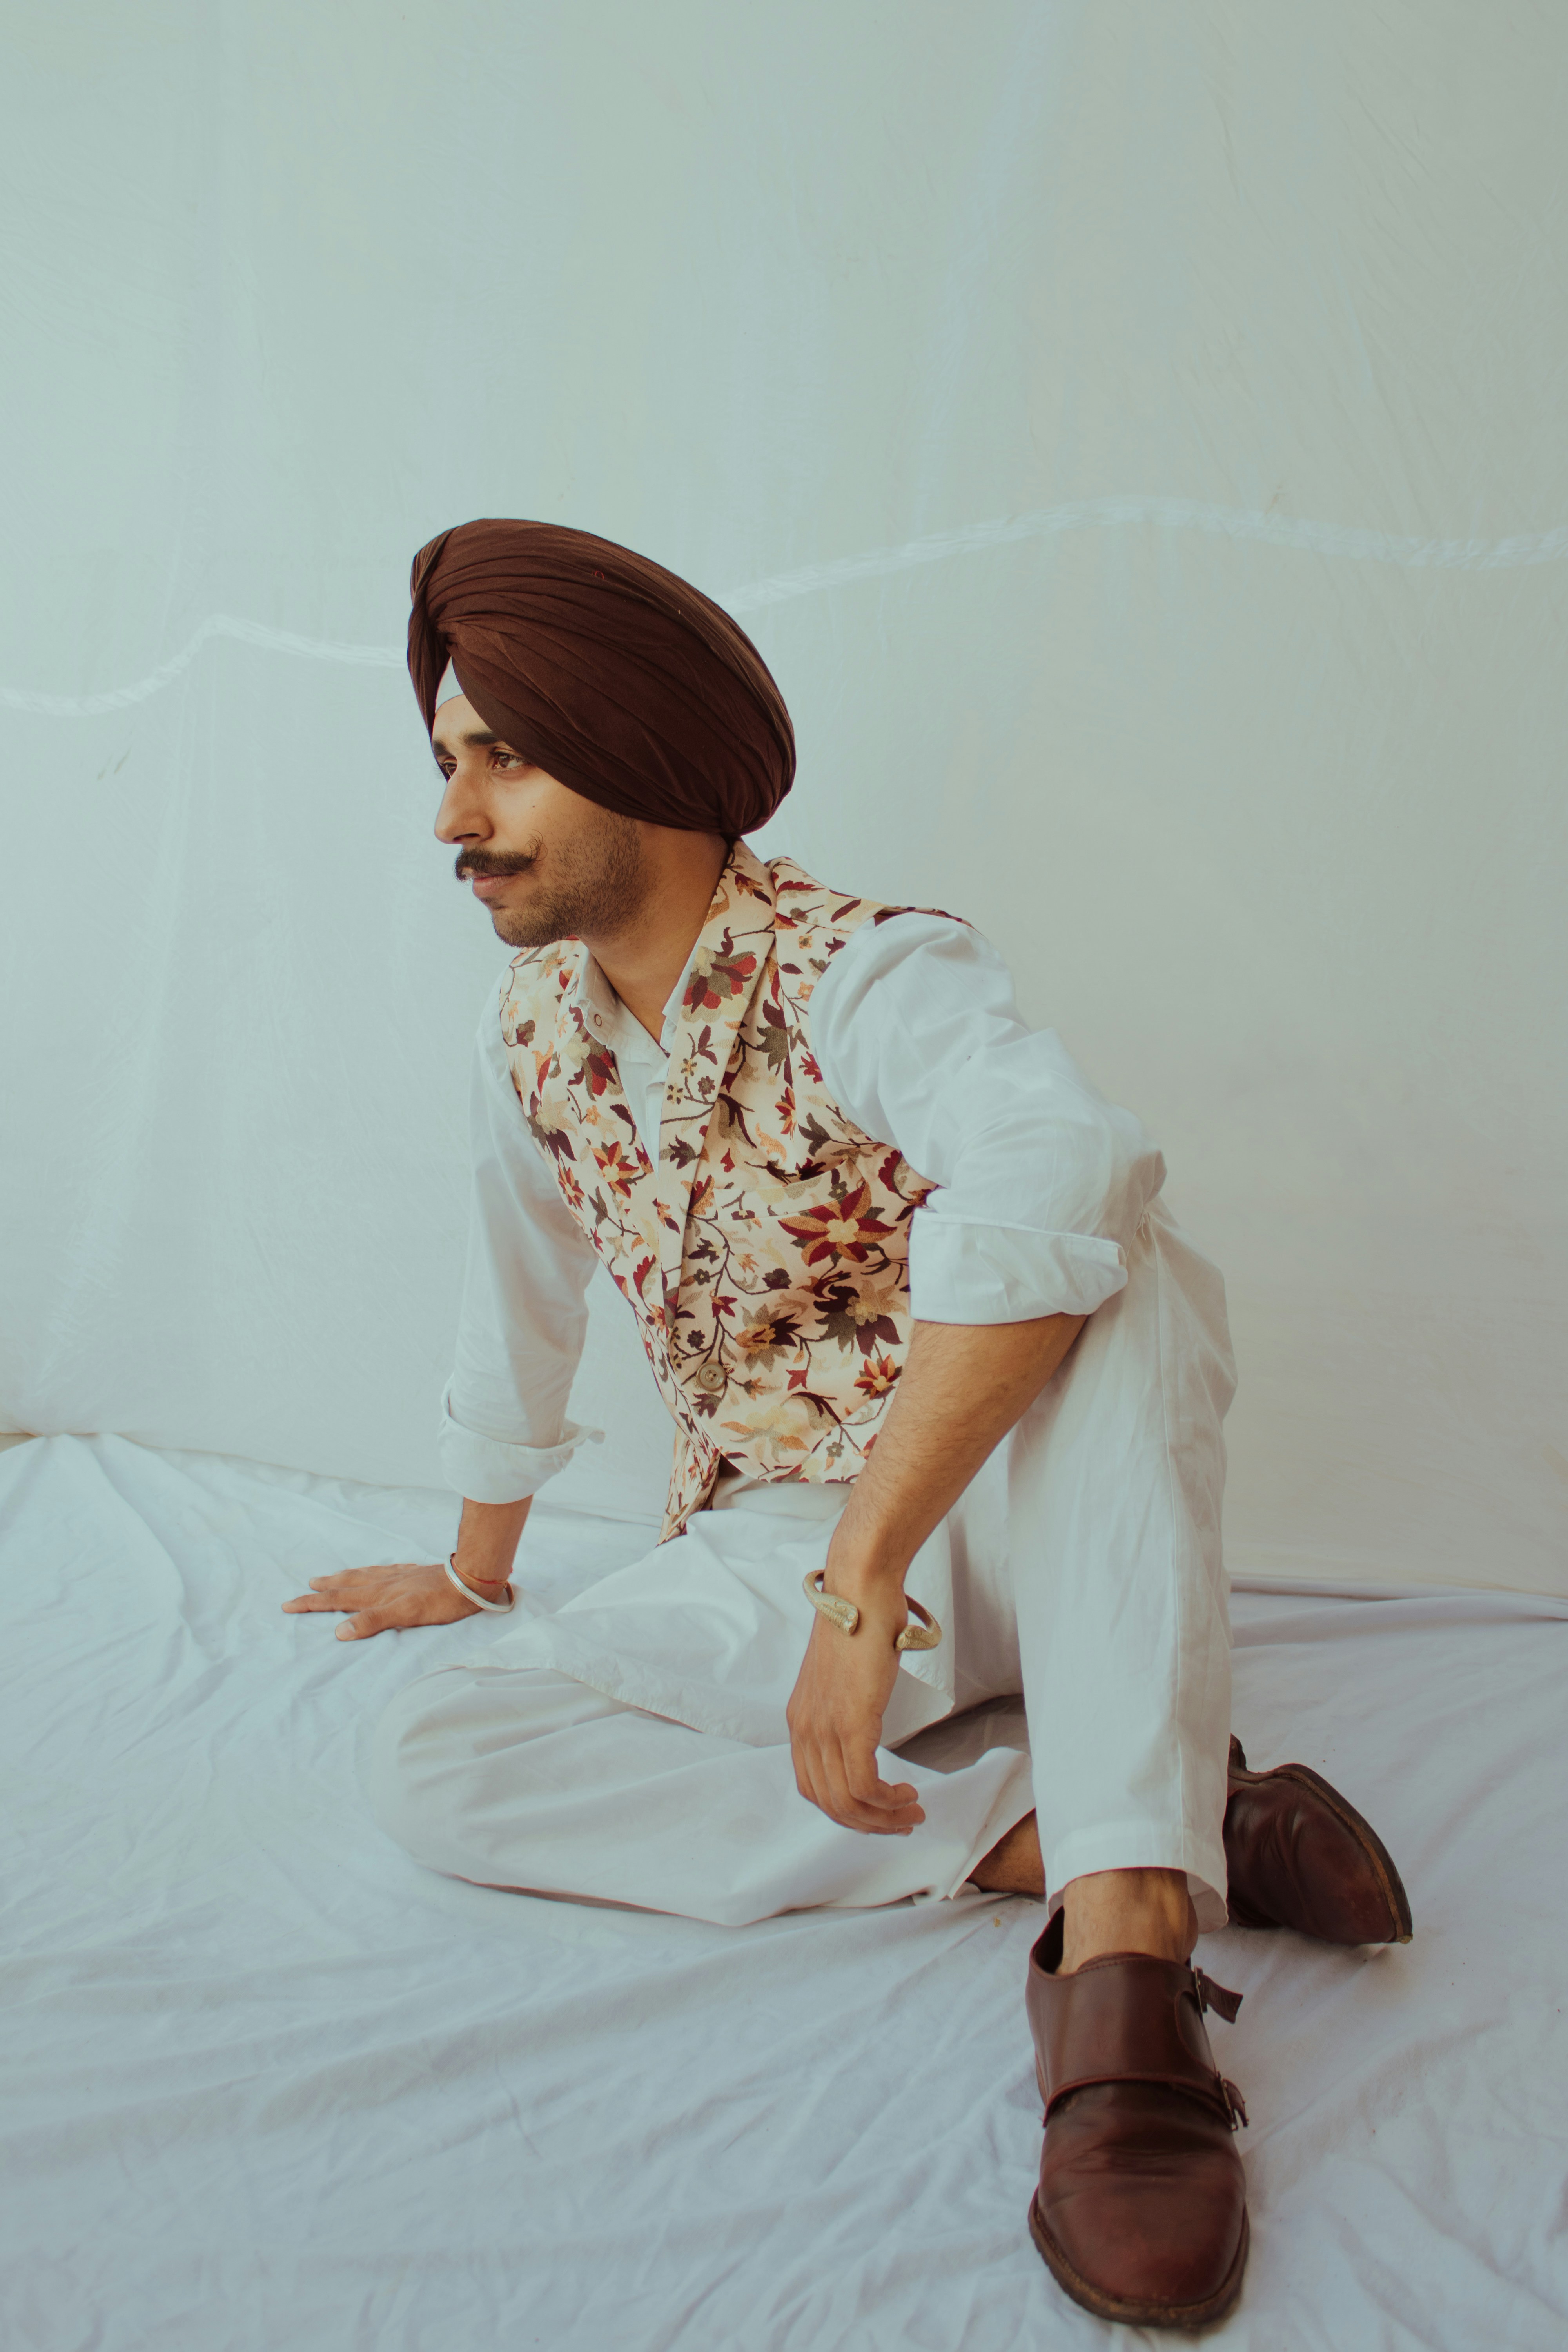 Sikh Gentleman in Turban